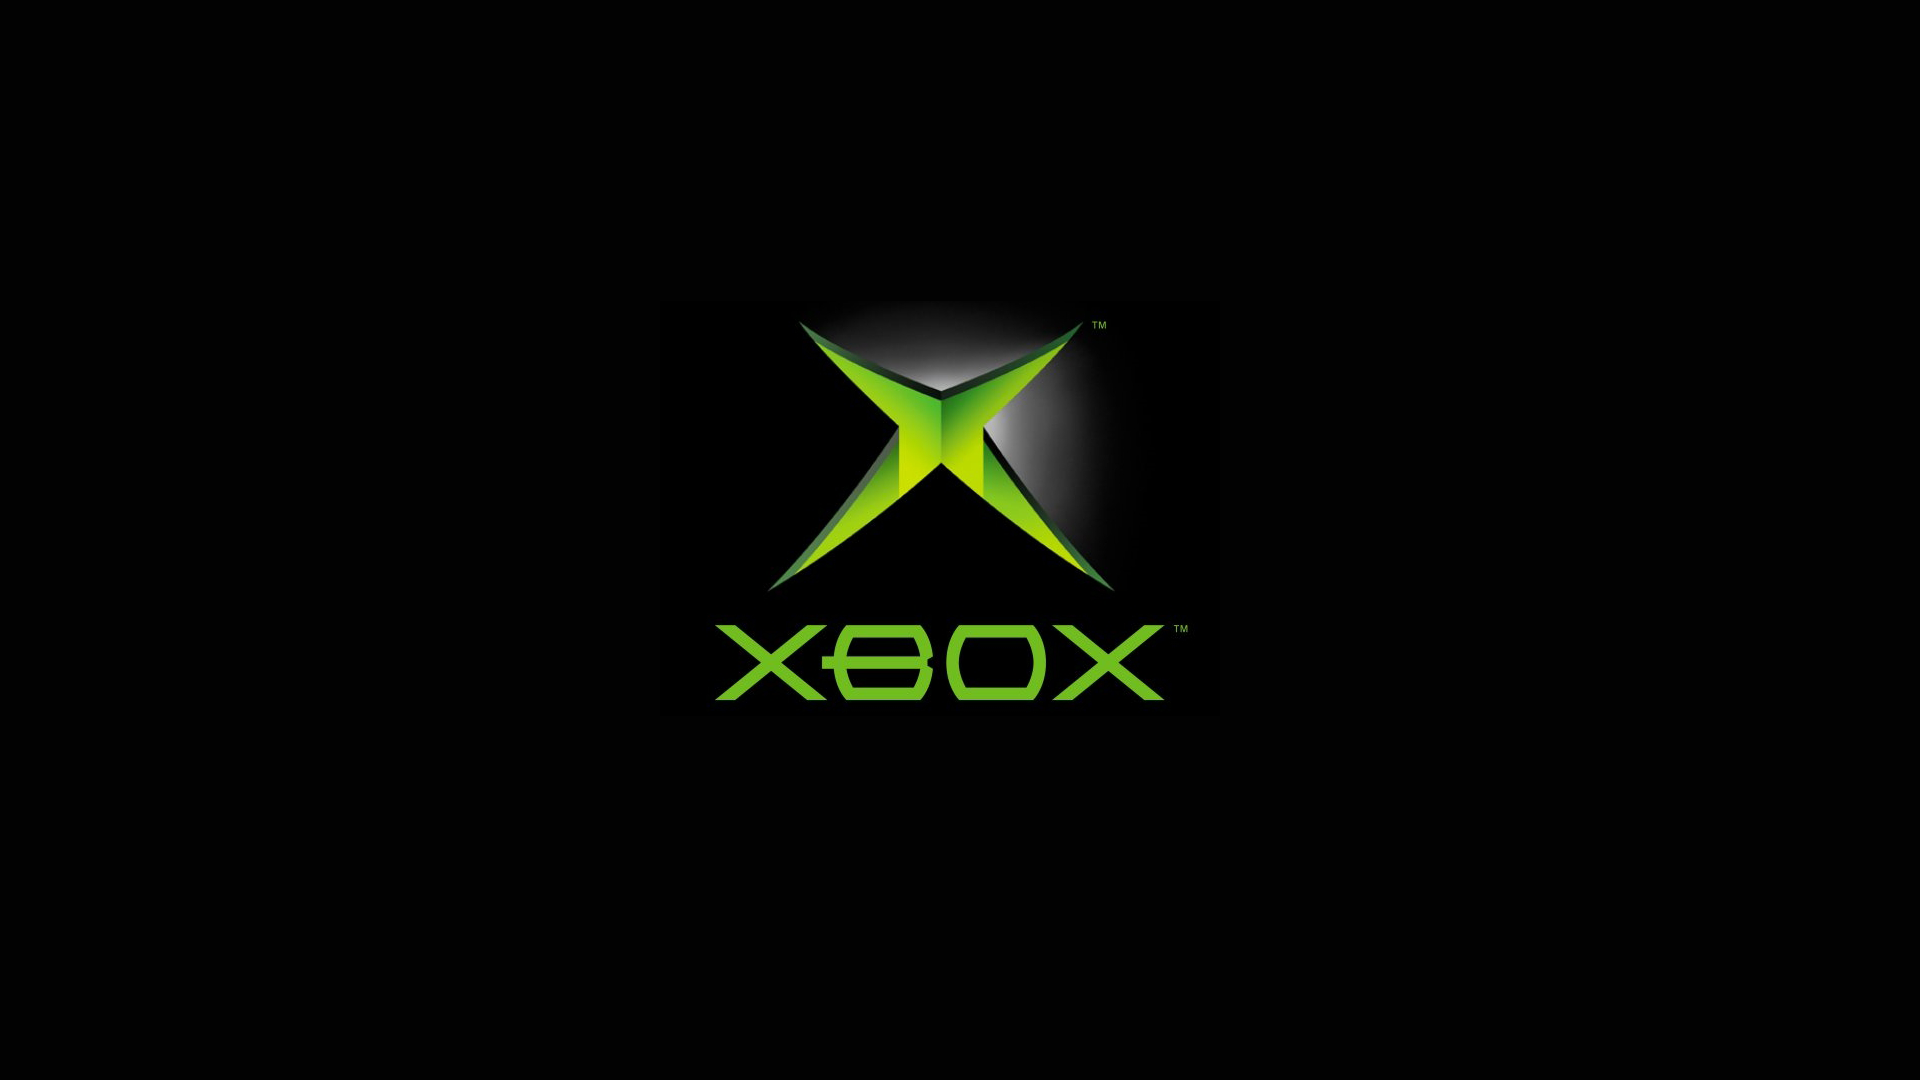 General 1920x1080 Xbox black background video games logo Microsoft nostalgia green consoles